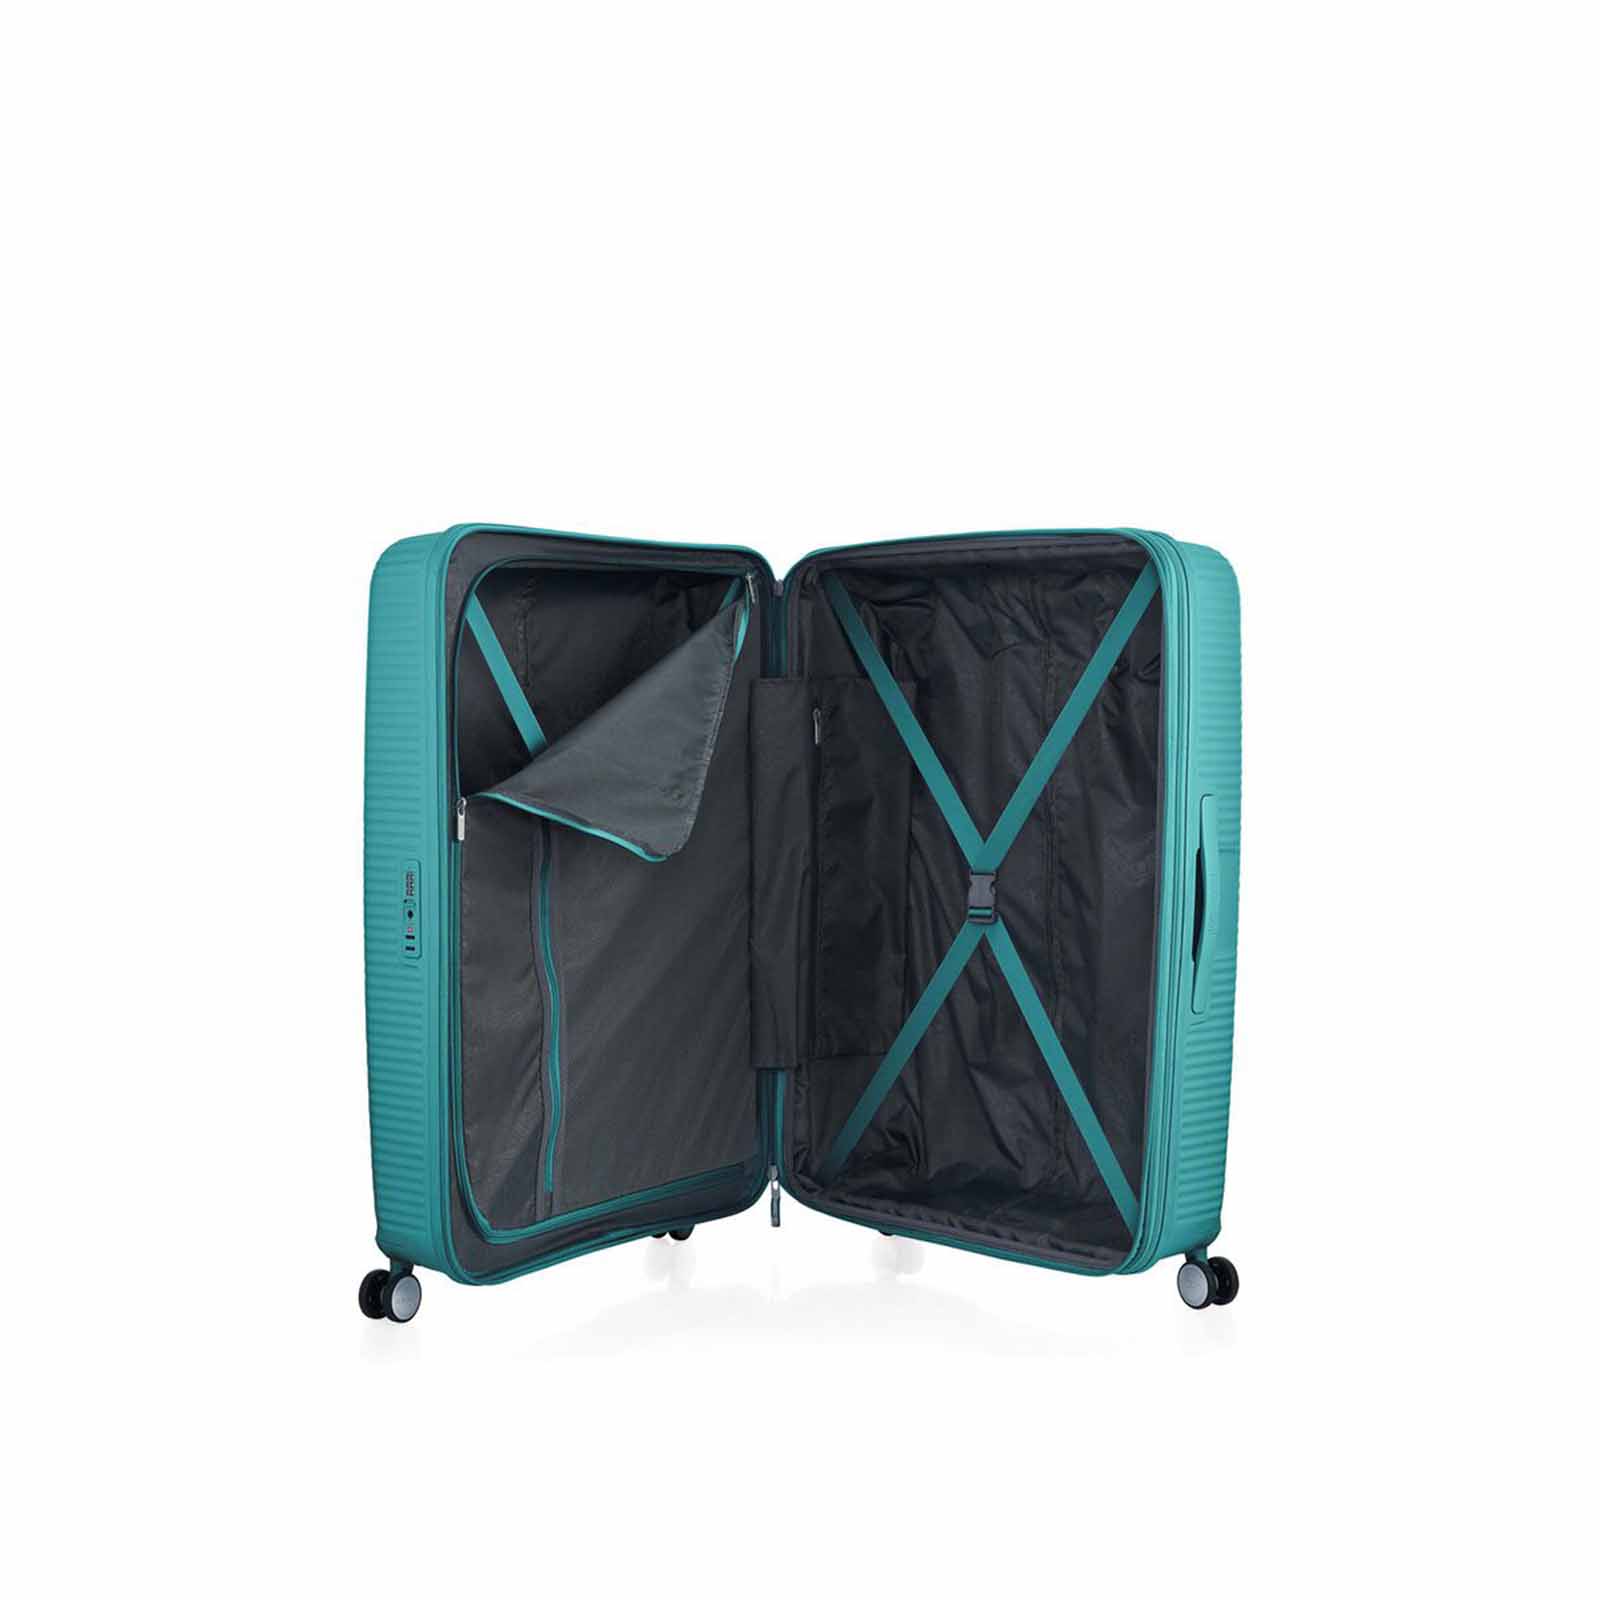 American-Tourister-Curio-2-80cm-Suitcase-Jade-Green-Open